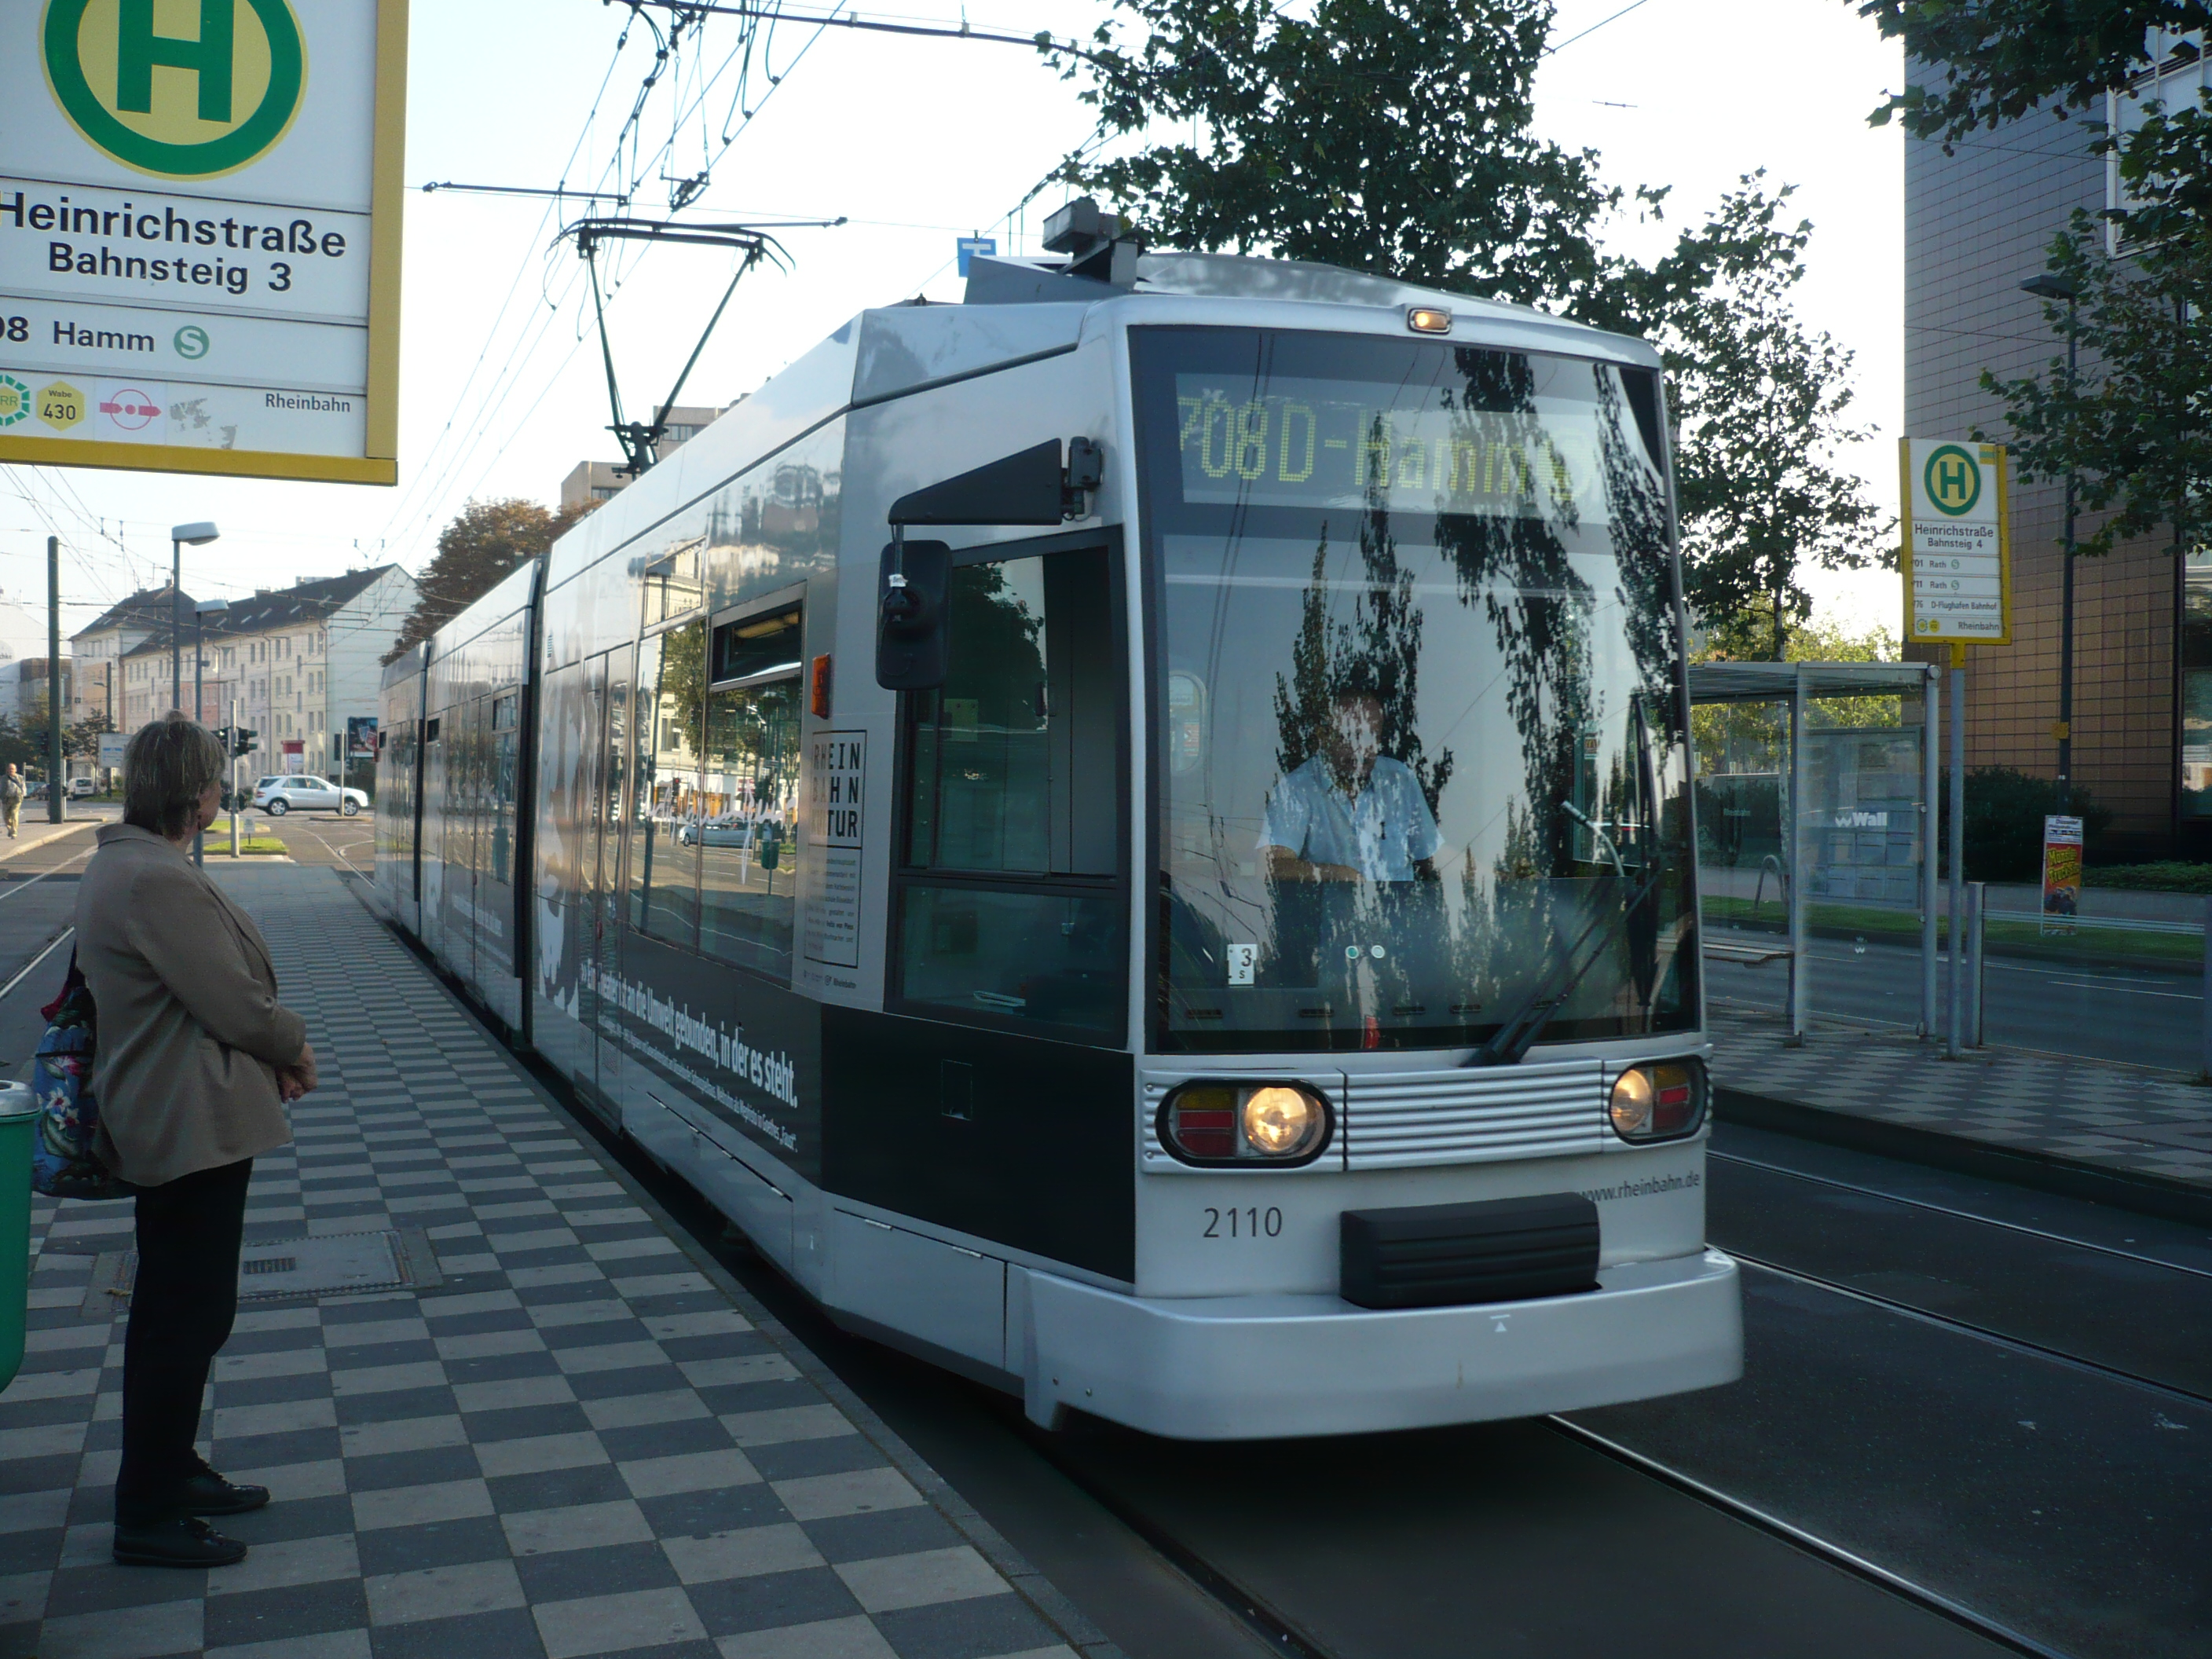 Dusseldorf tram